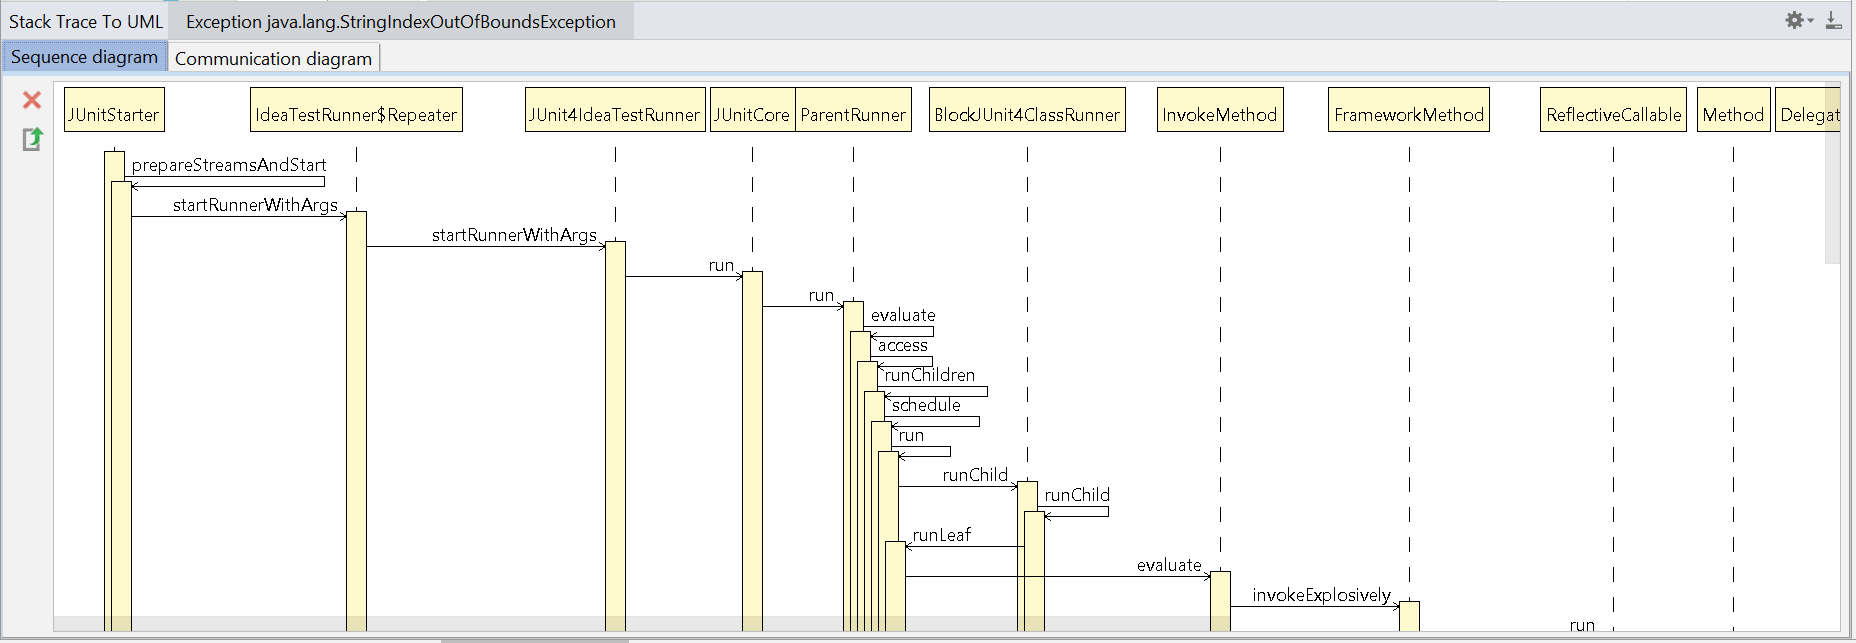 Stack trace to UML - Plugins | JetBrains